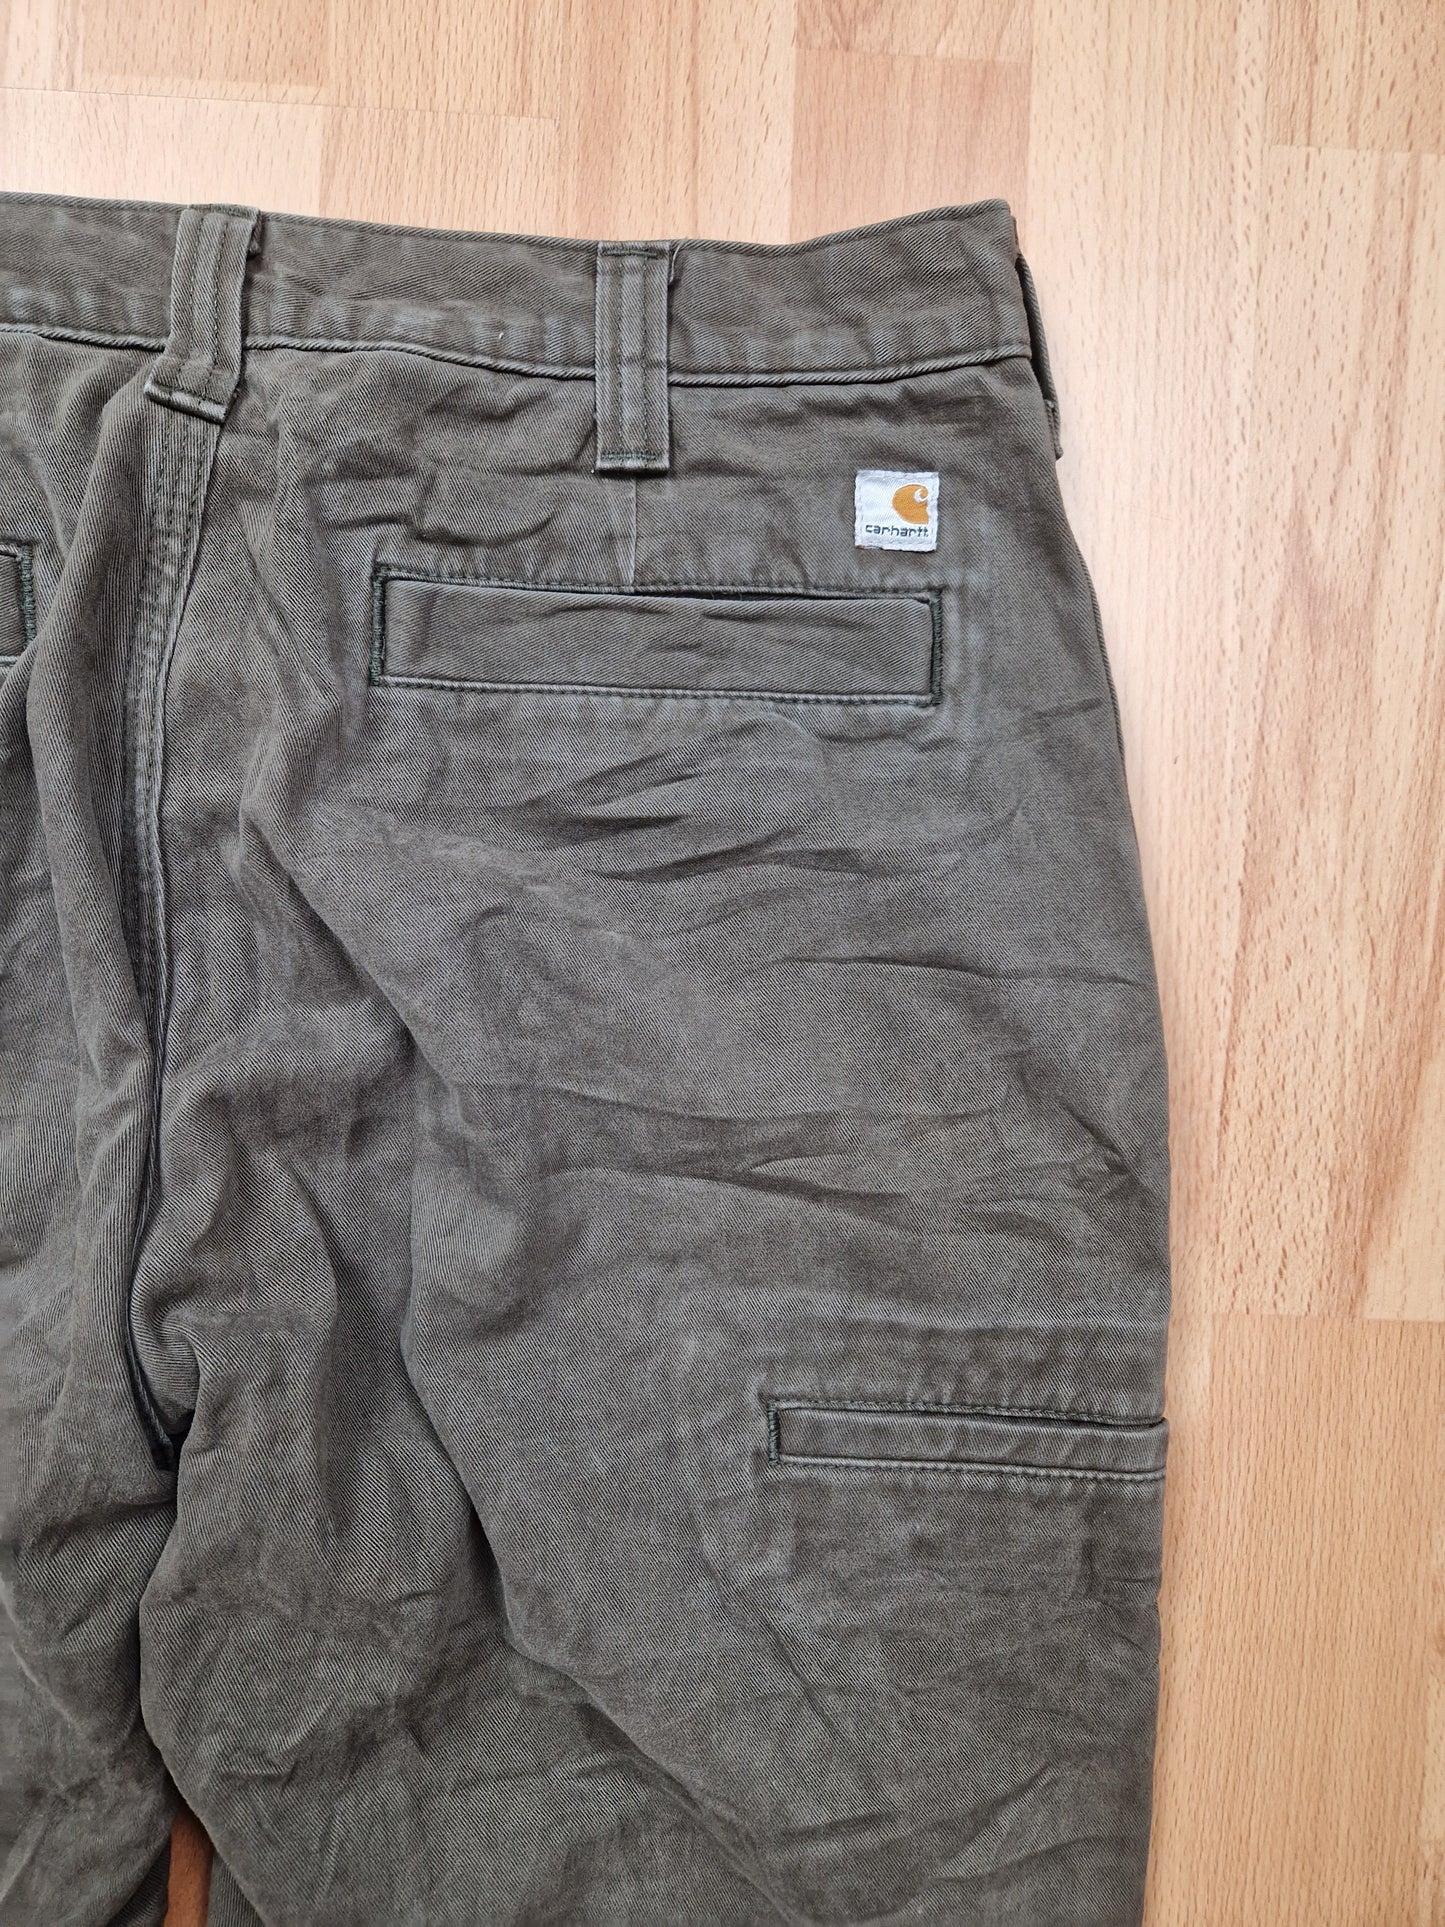 Carhartt 5 Pocket Brown Cargo Pants (34x34)